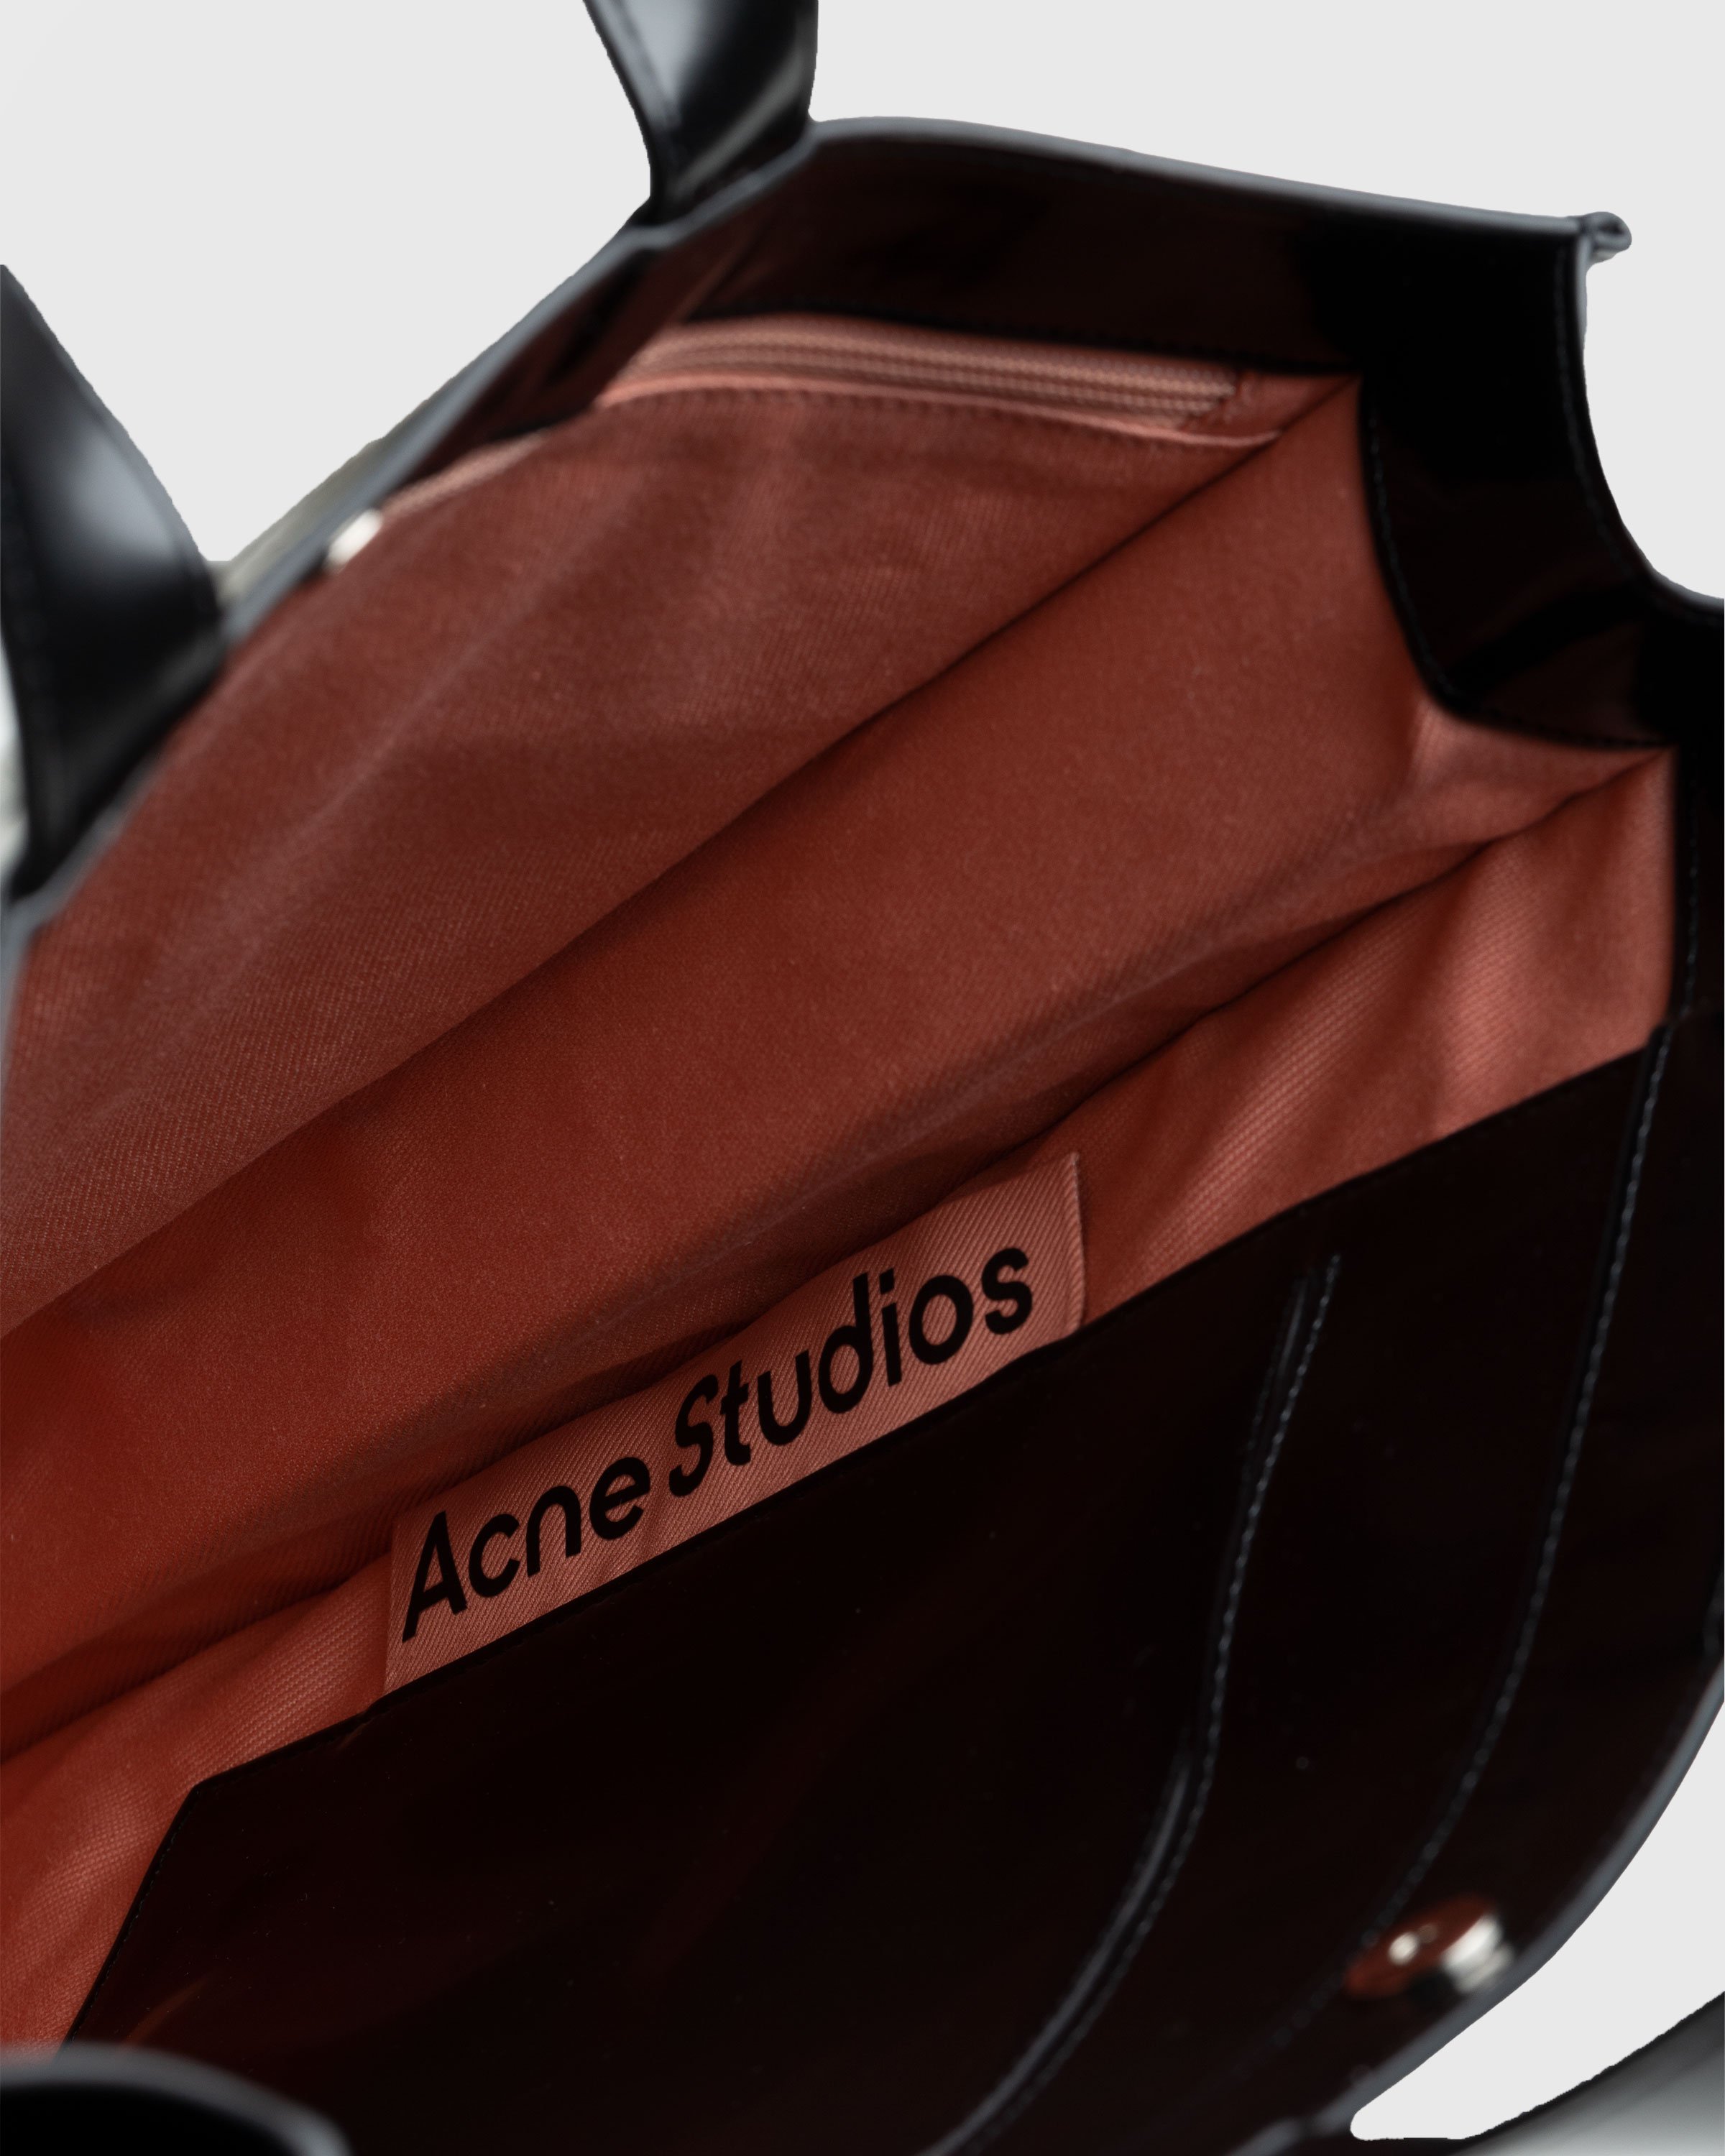 Acne Studios - Logo Tote Bag Black - Accessories - Black - Image 5